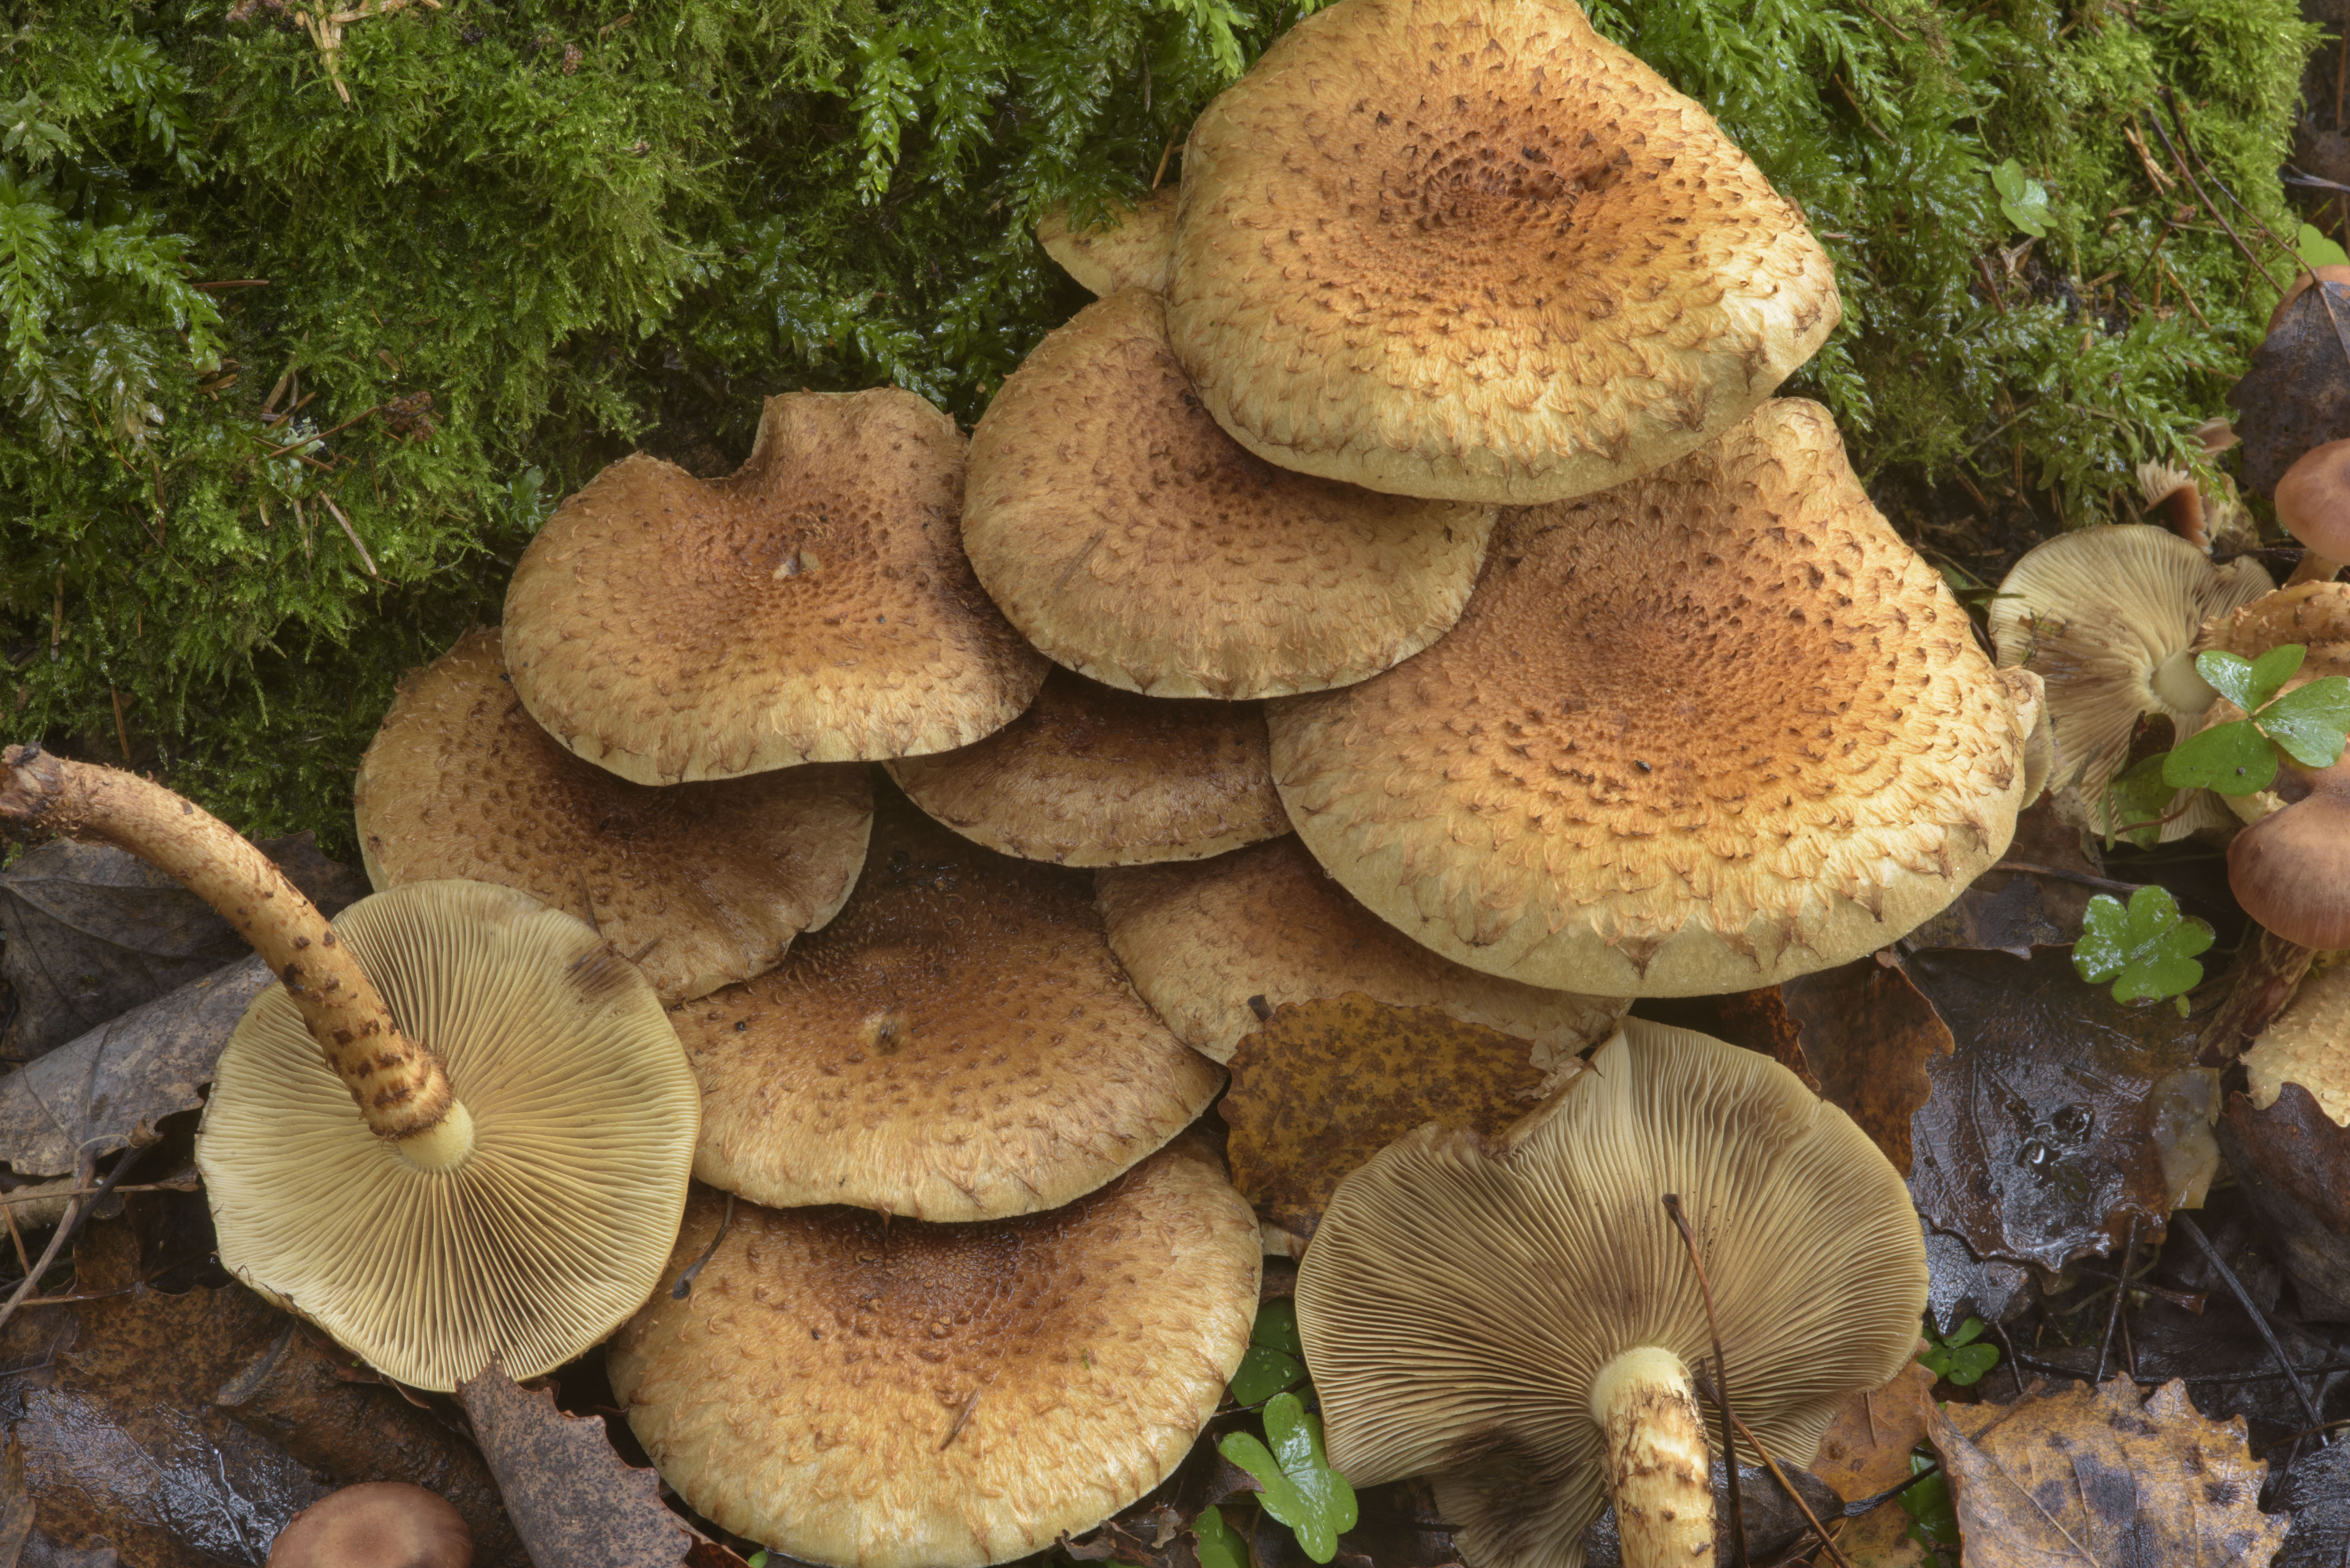 Photo 1941-31: Shaggy scalycap mushrooms (Pholiota squarrosa...south ...